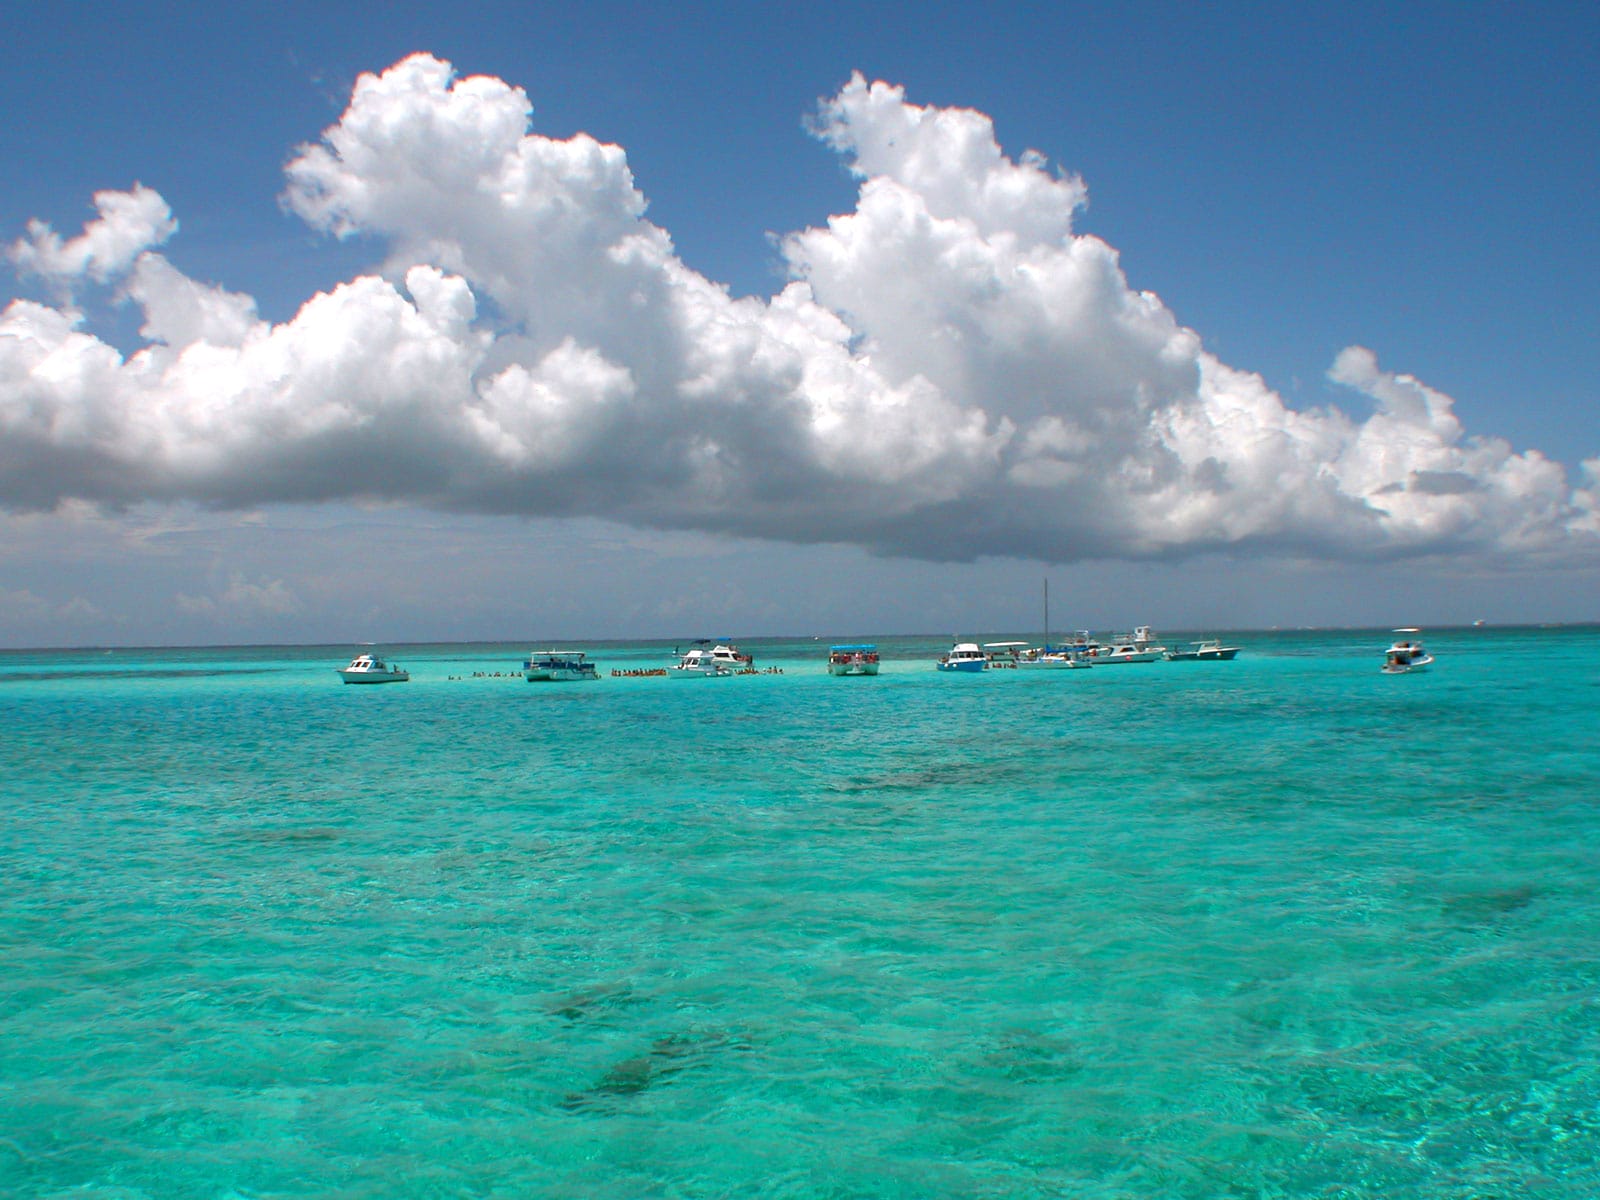 Landscape shot of famous Stin Gray City, at Grand Cayman, Cayman Islands